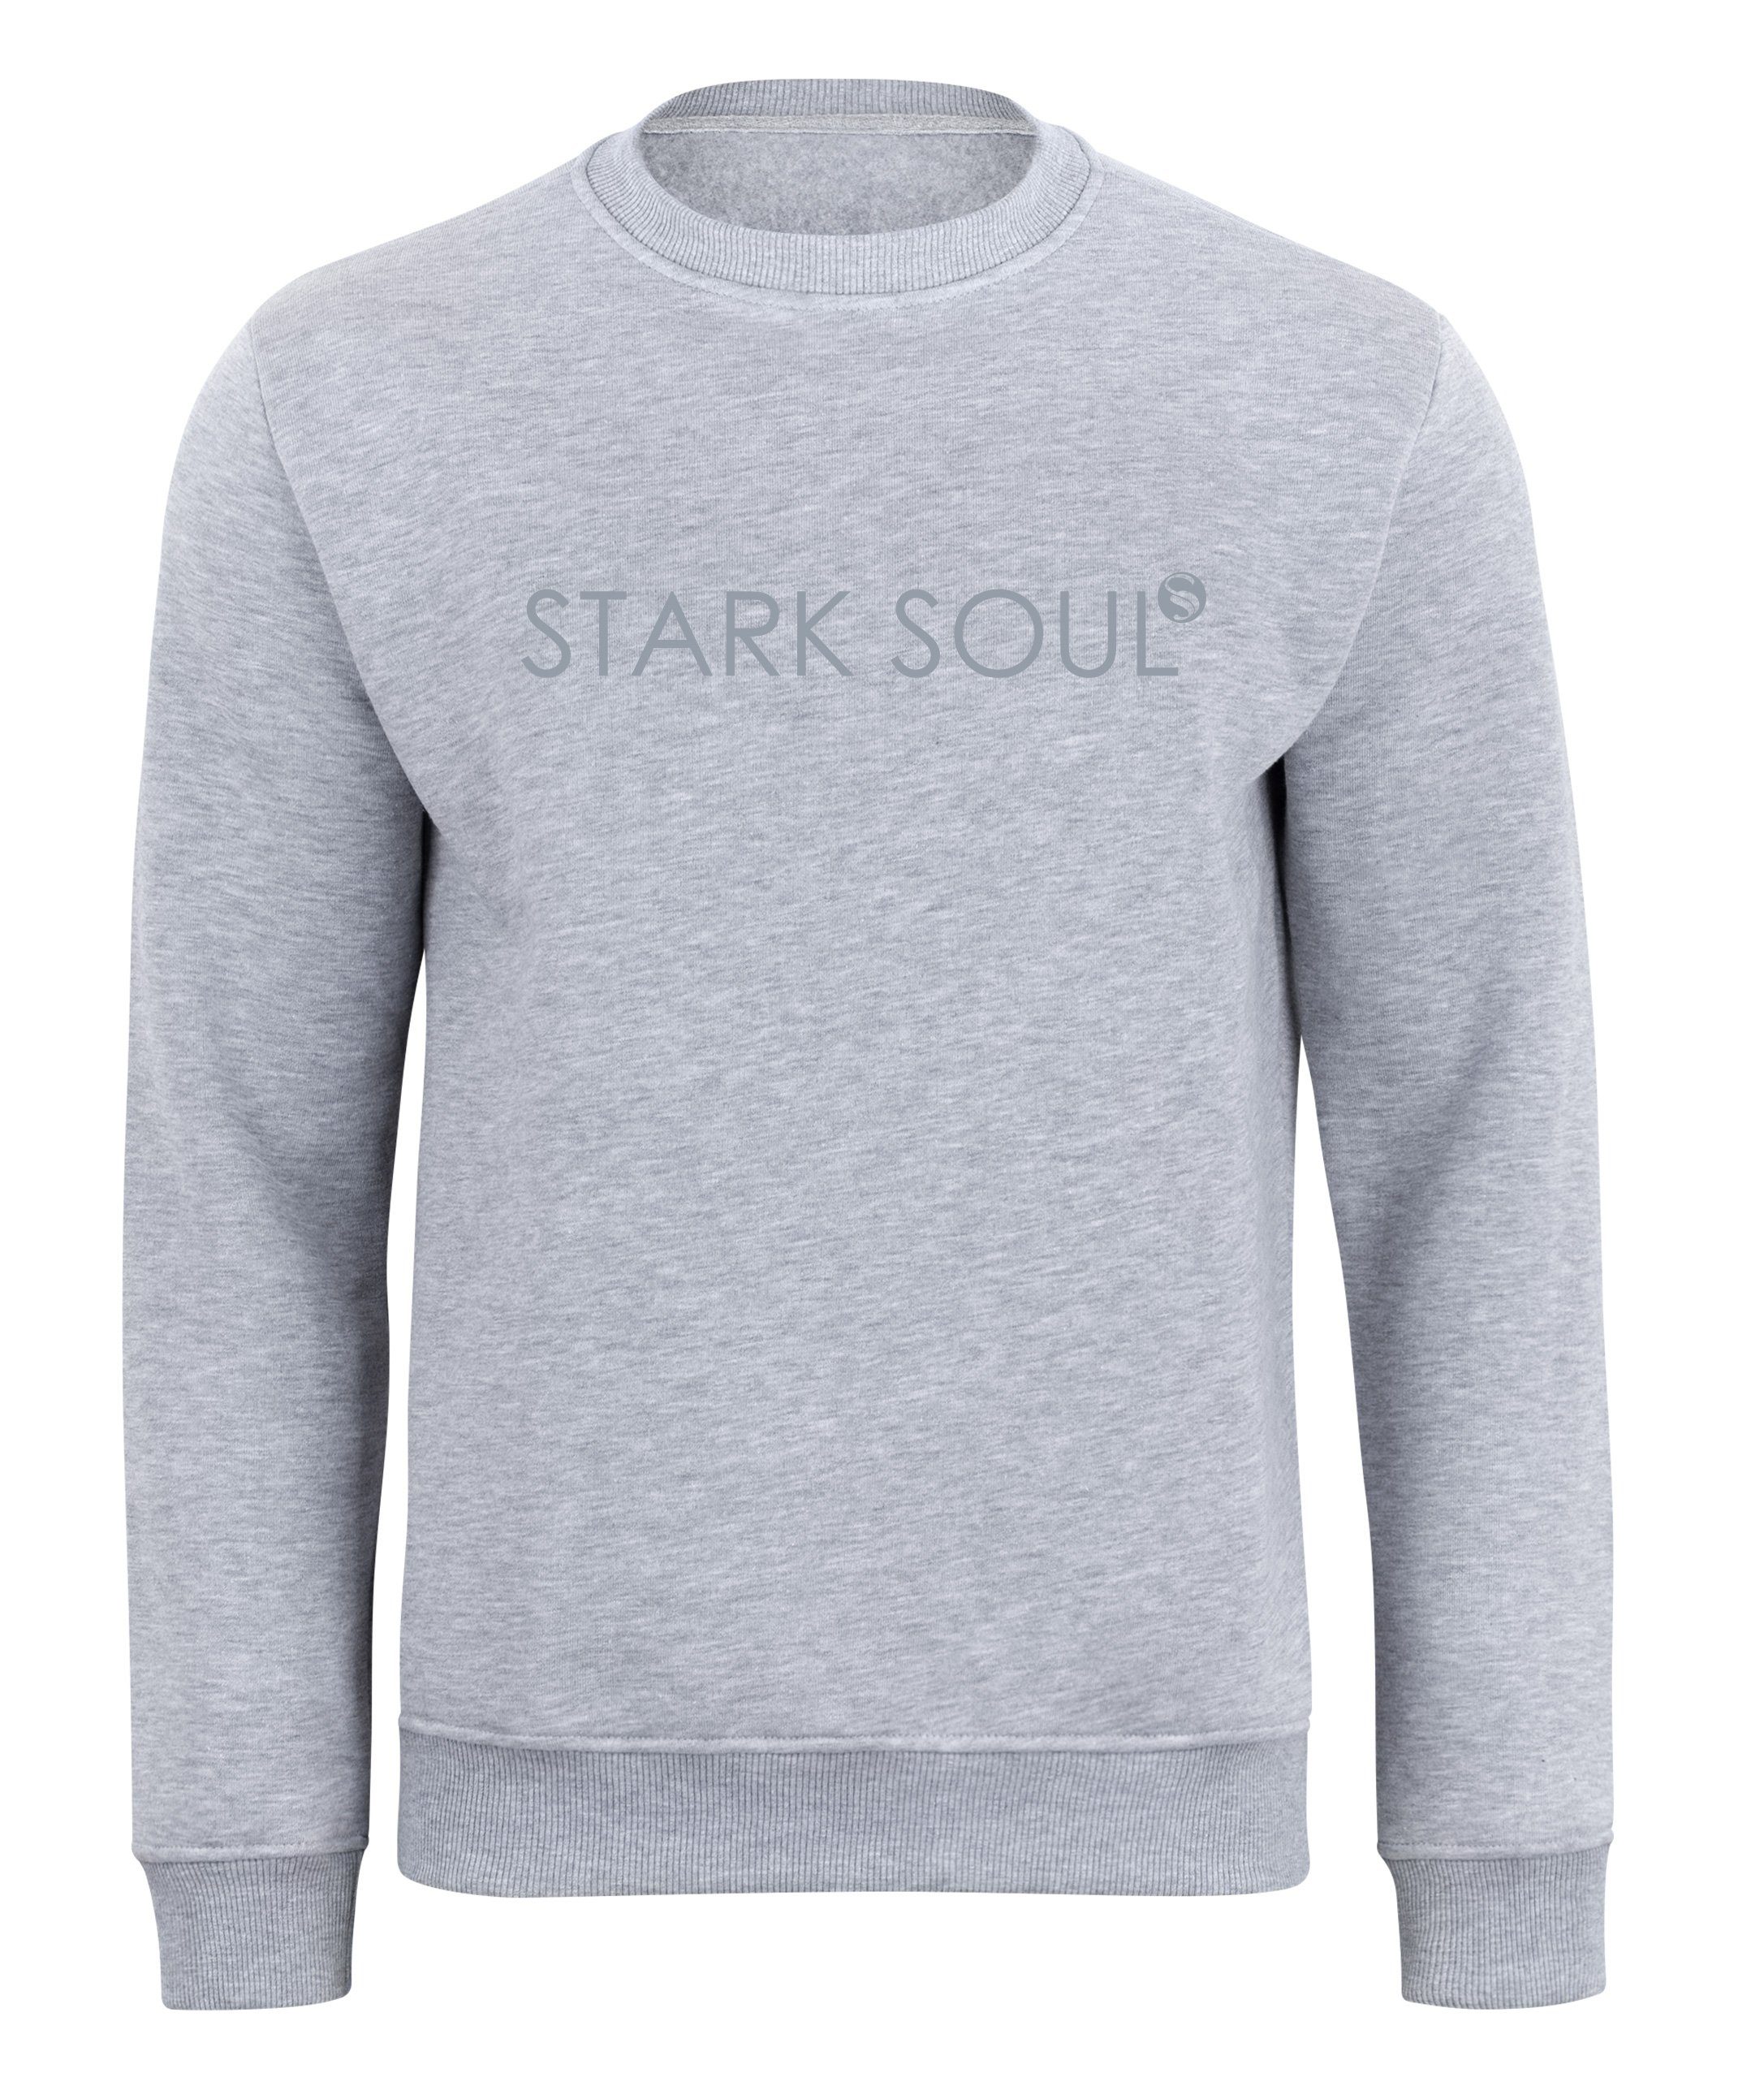 Soul® Stark Grau-Melange Logoprint Sweatshirt French-Terry-Rundhals-Sweatshirt, angeraut Innen mit